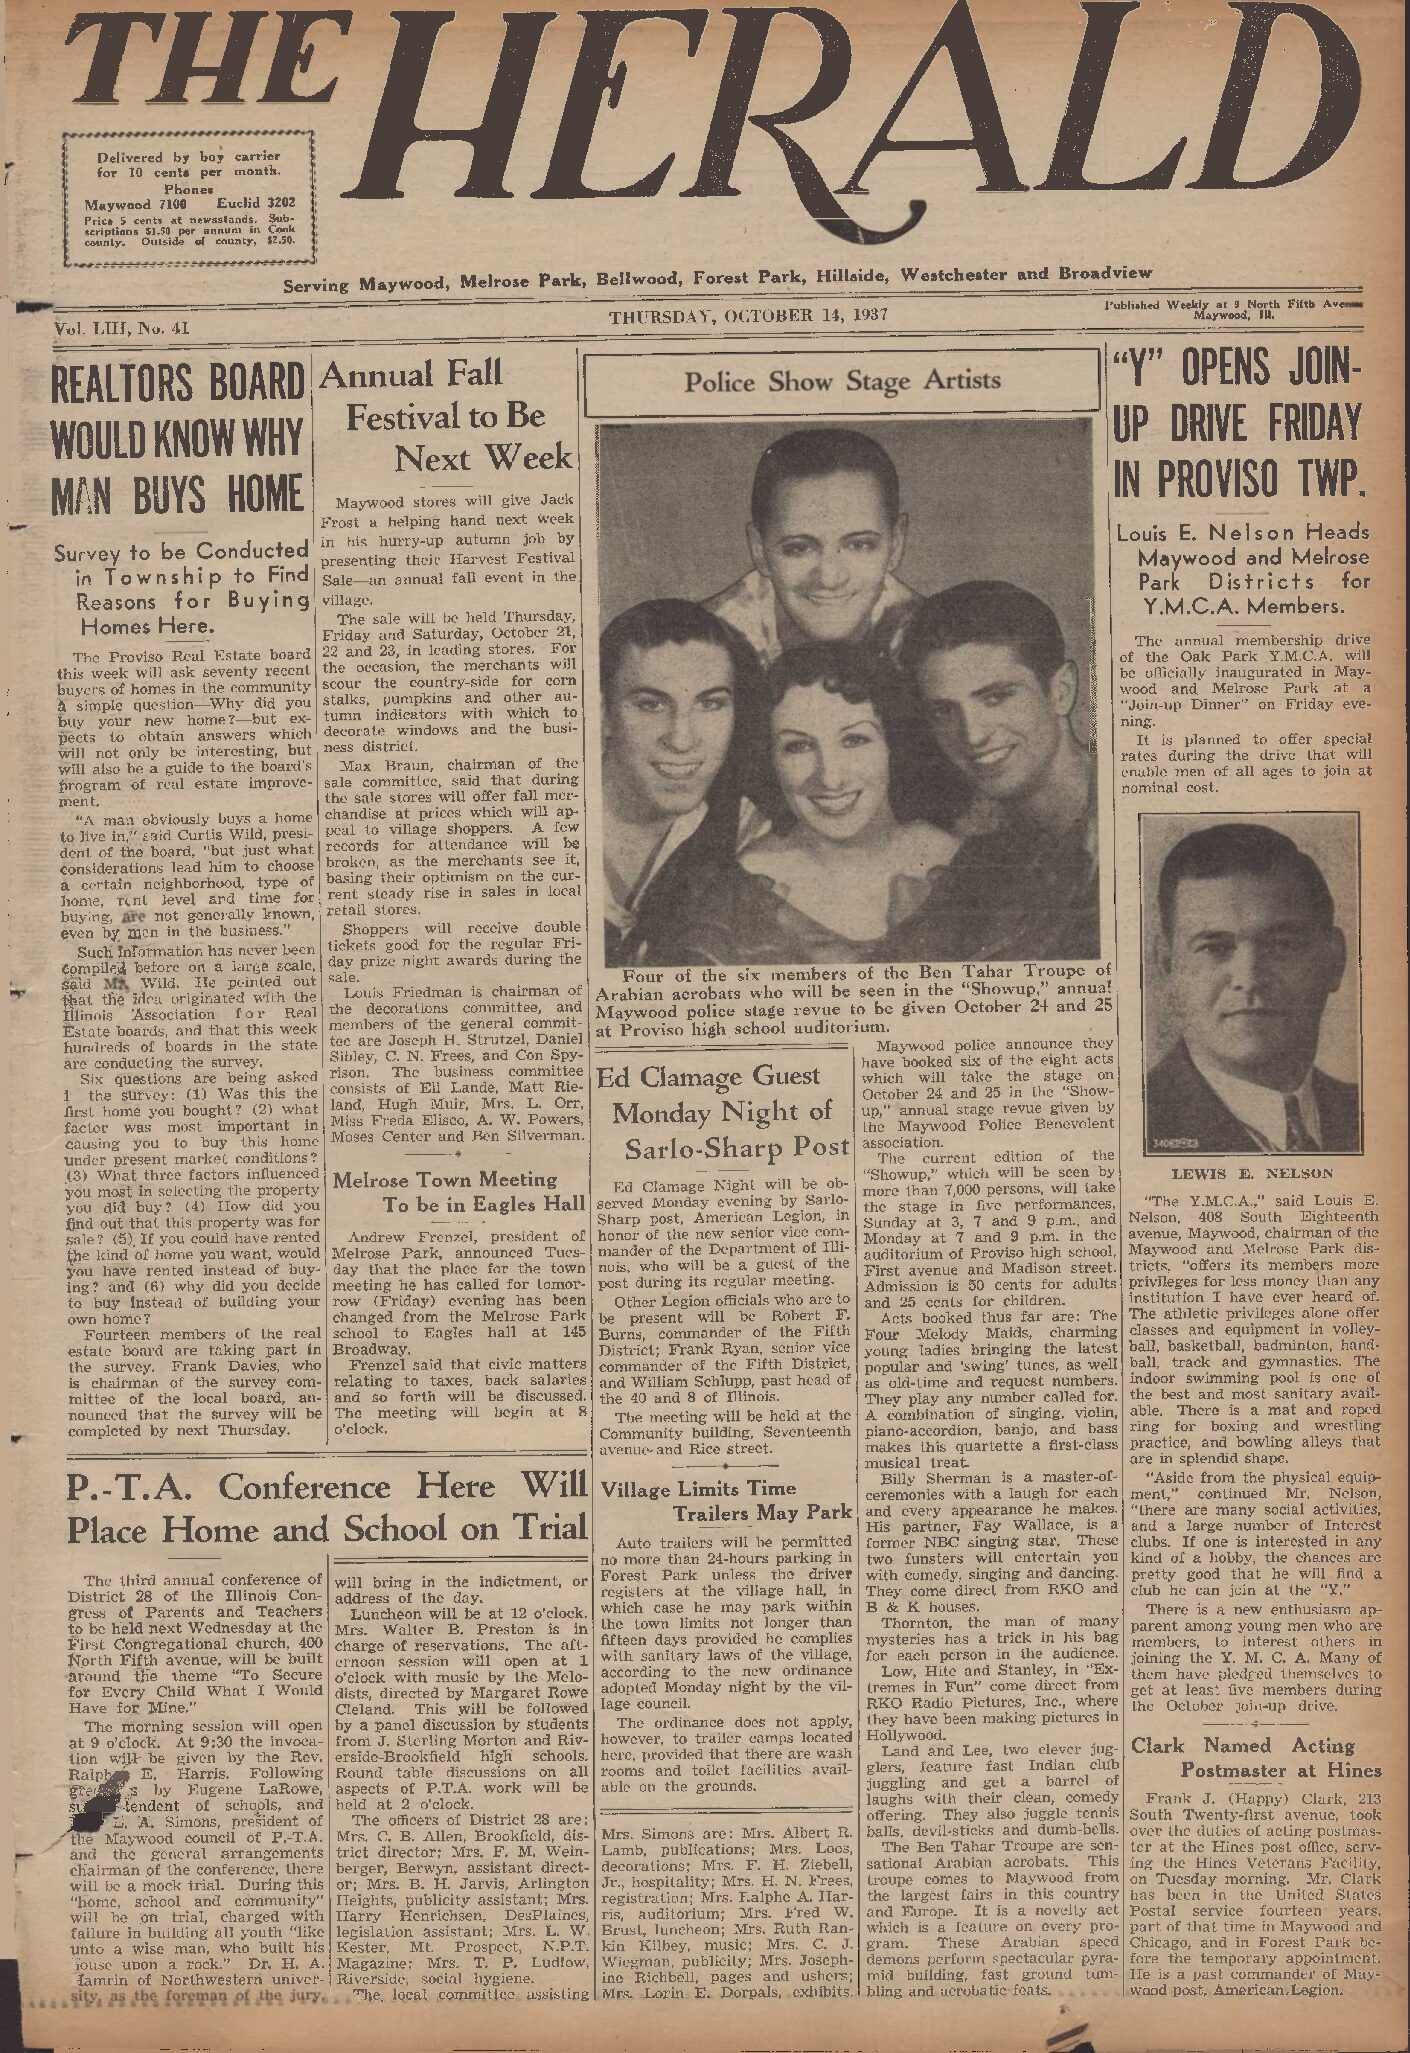 The Herald – 19371014